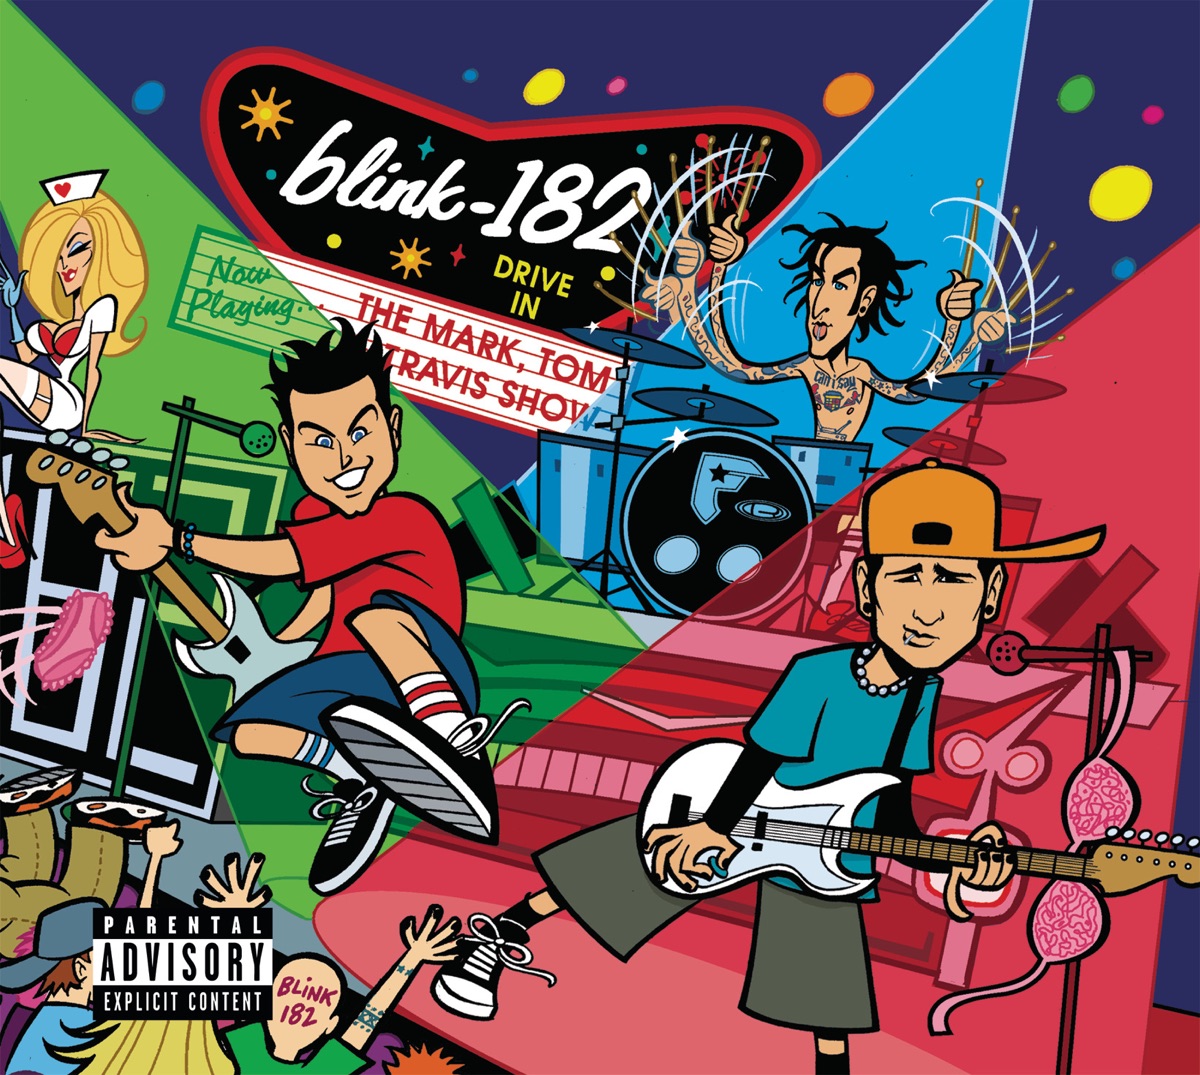 blink-182 - Radio Station - Apple Music